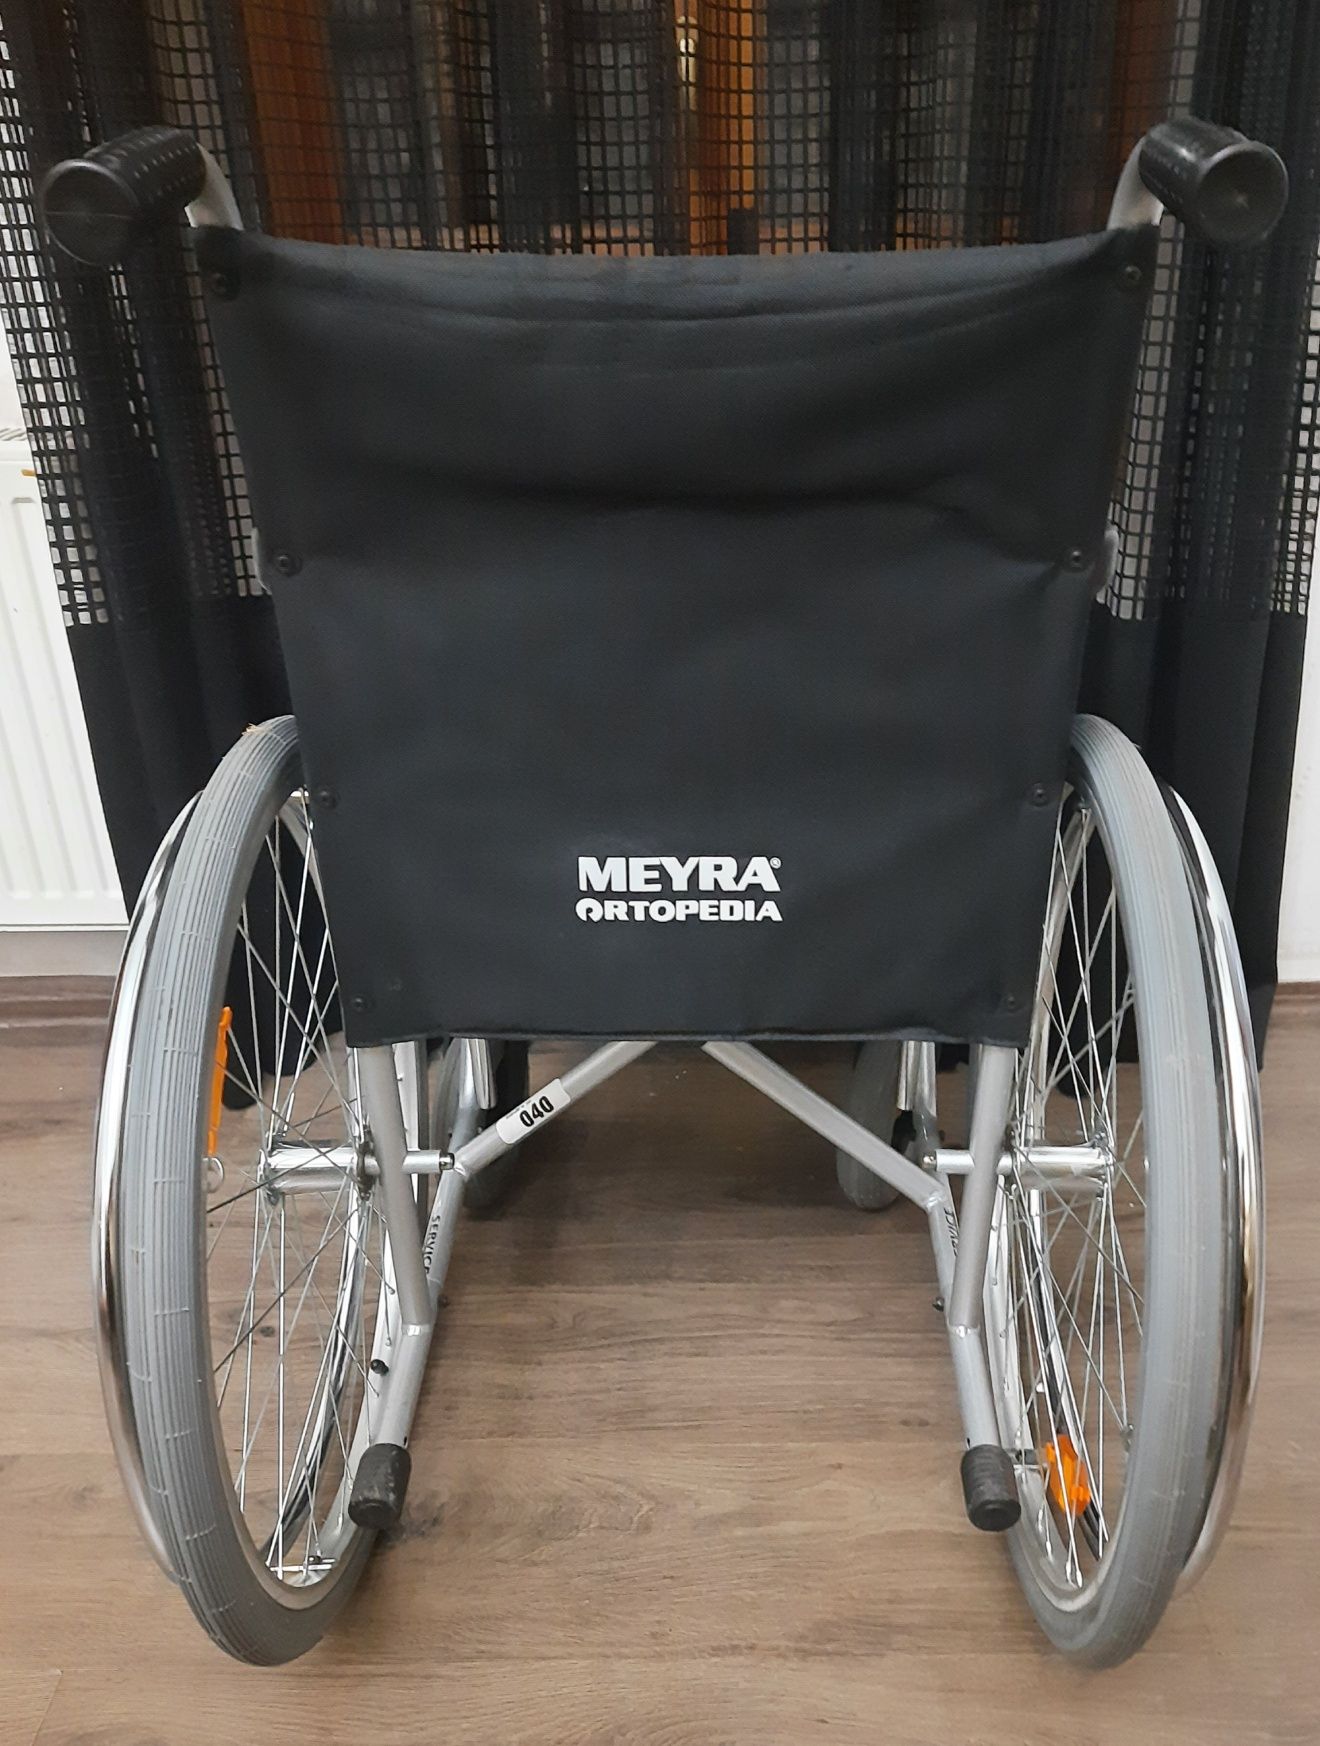 Инвалидная коляска продажа прокат и аренда 100% качество пр-во Германи